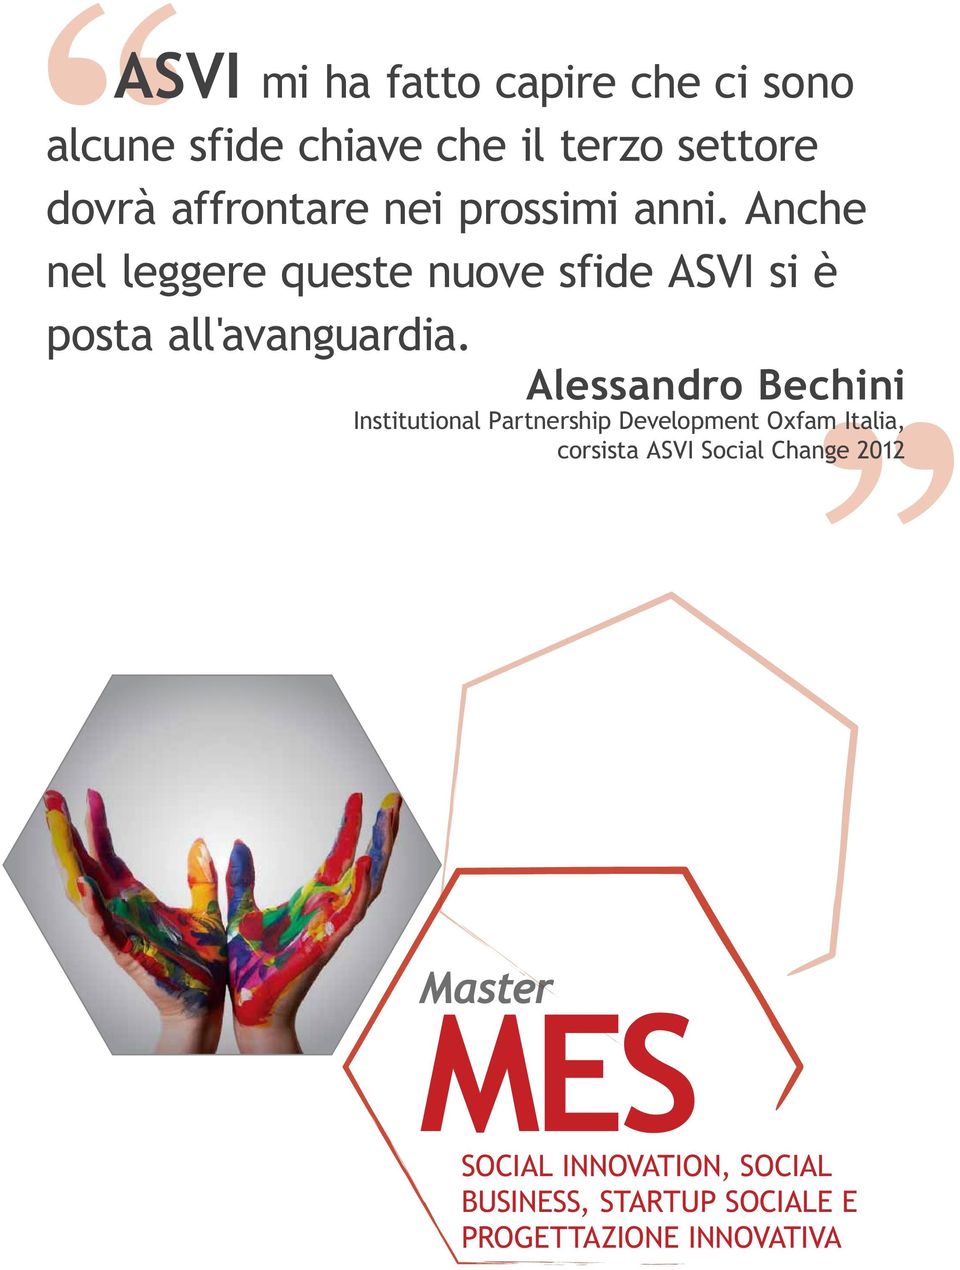 Alessandro Bechini Institutional Partnership Development Oxfam Italia, corsista ASVI Social